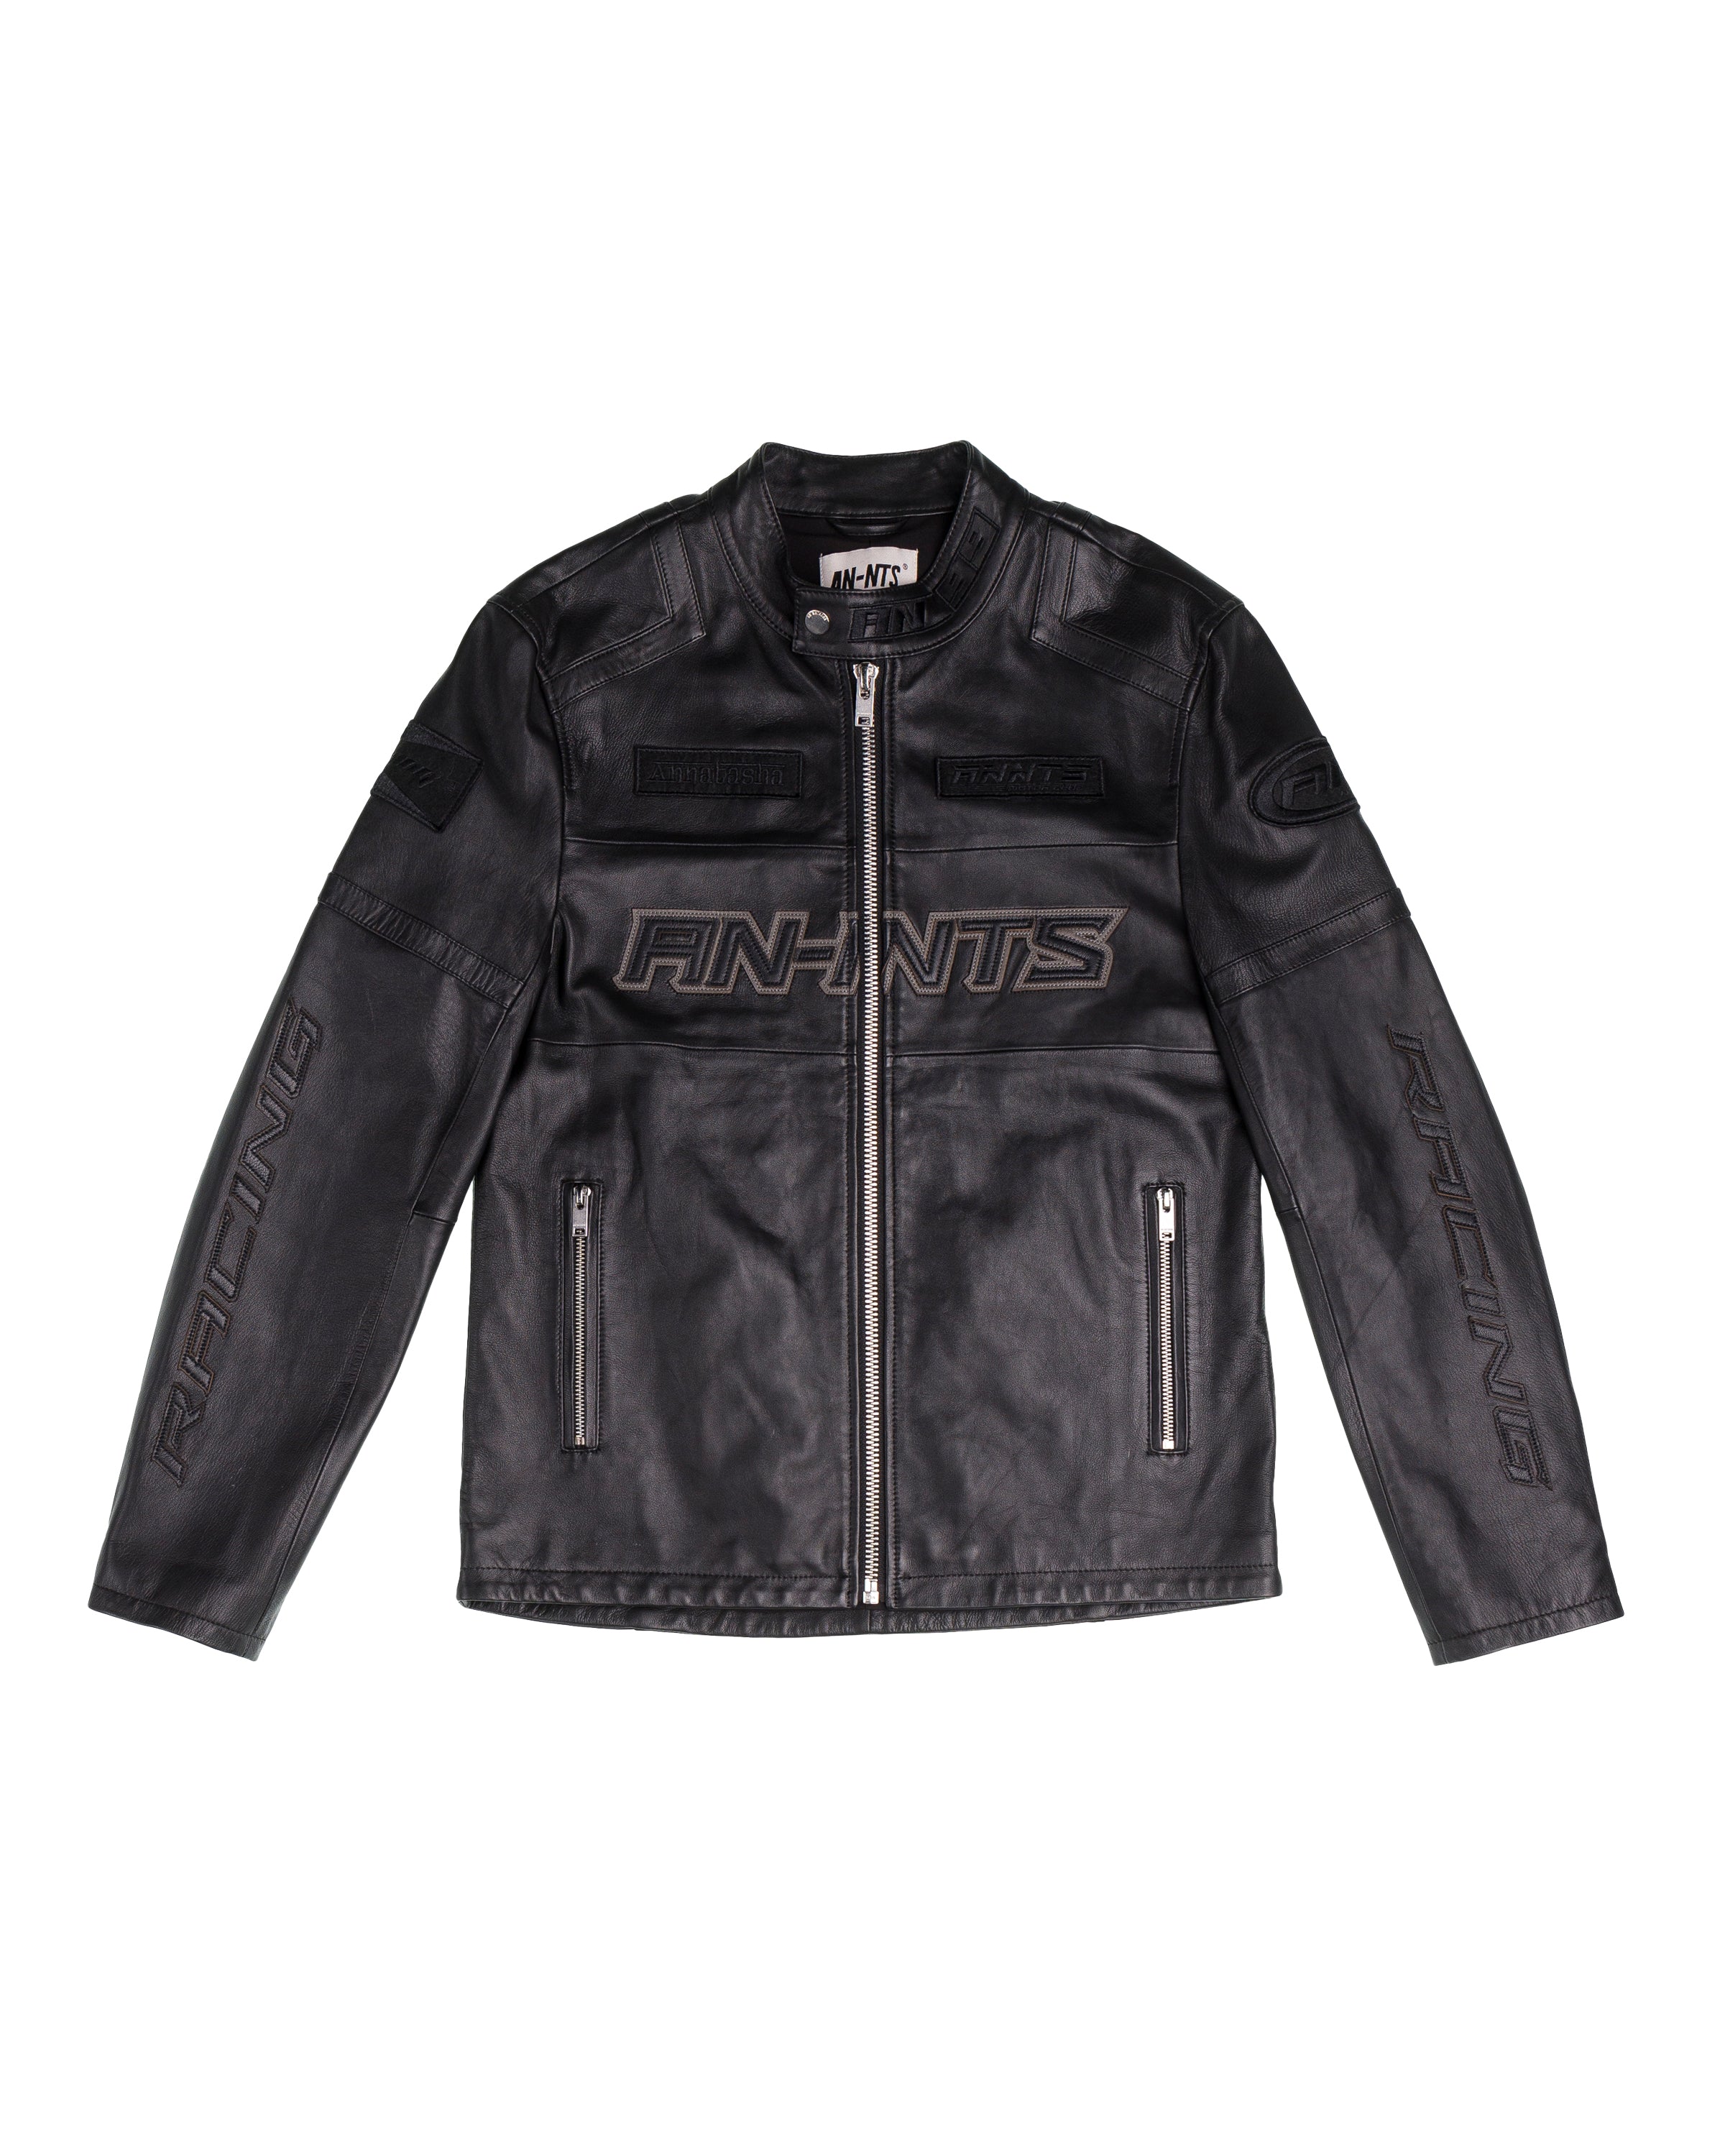 AN-NATASHA Zip Leather Jacket #AN23F-002